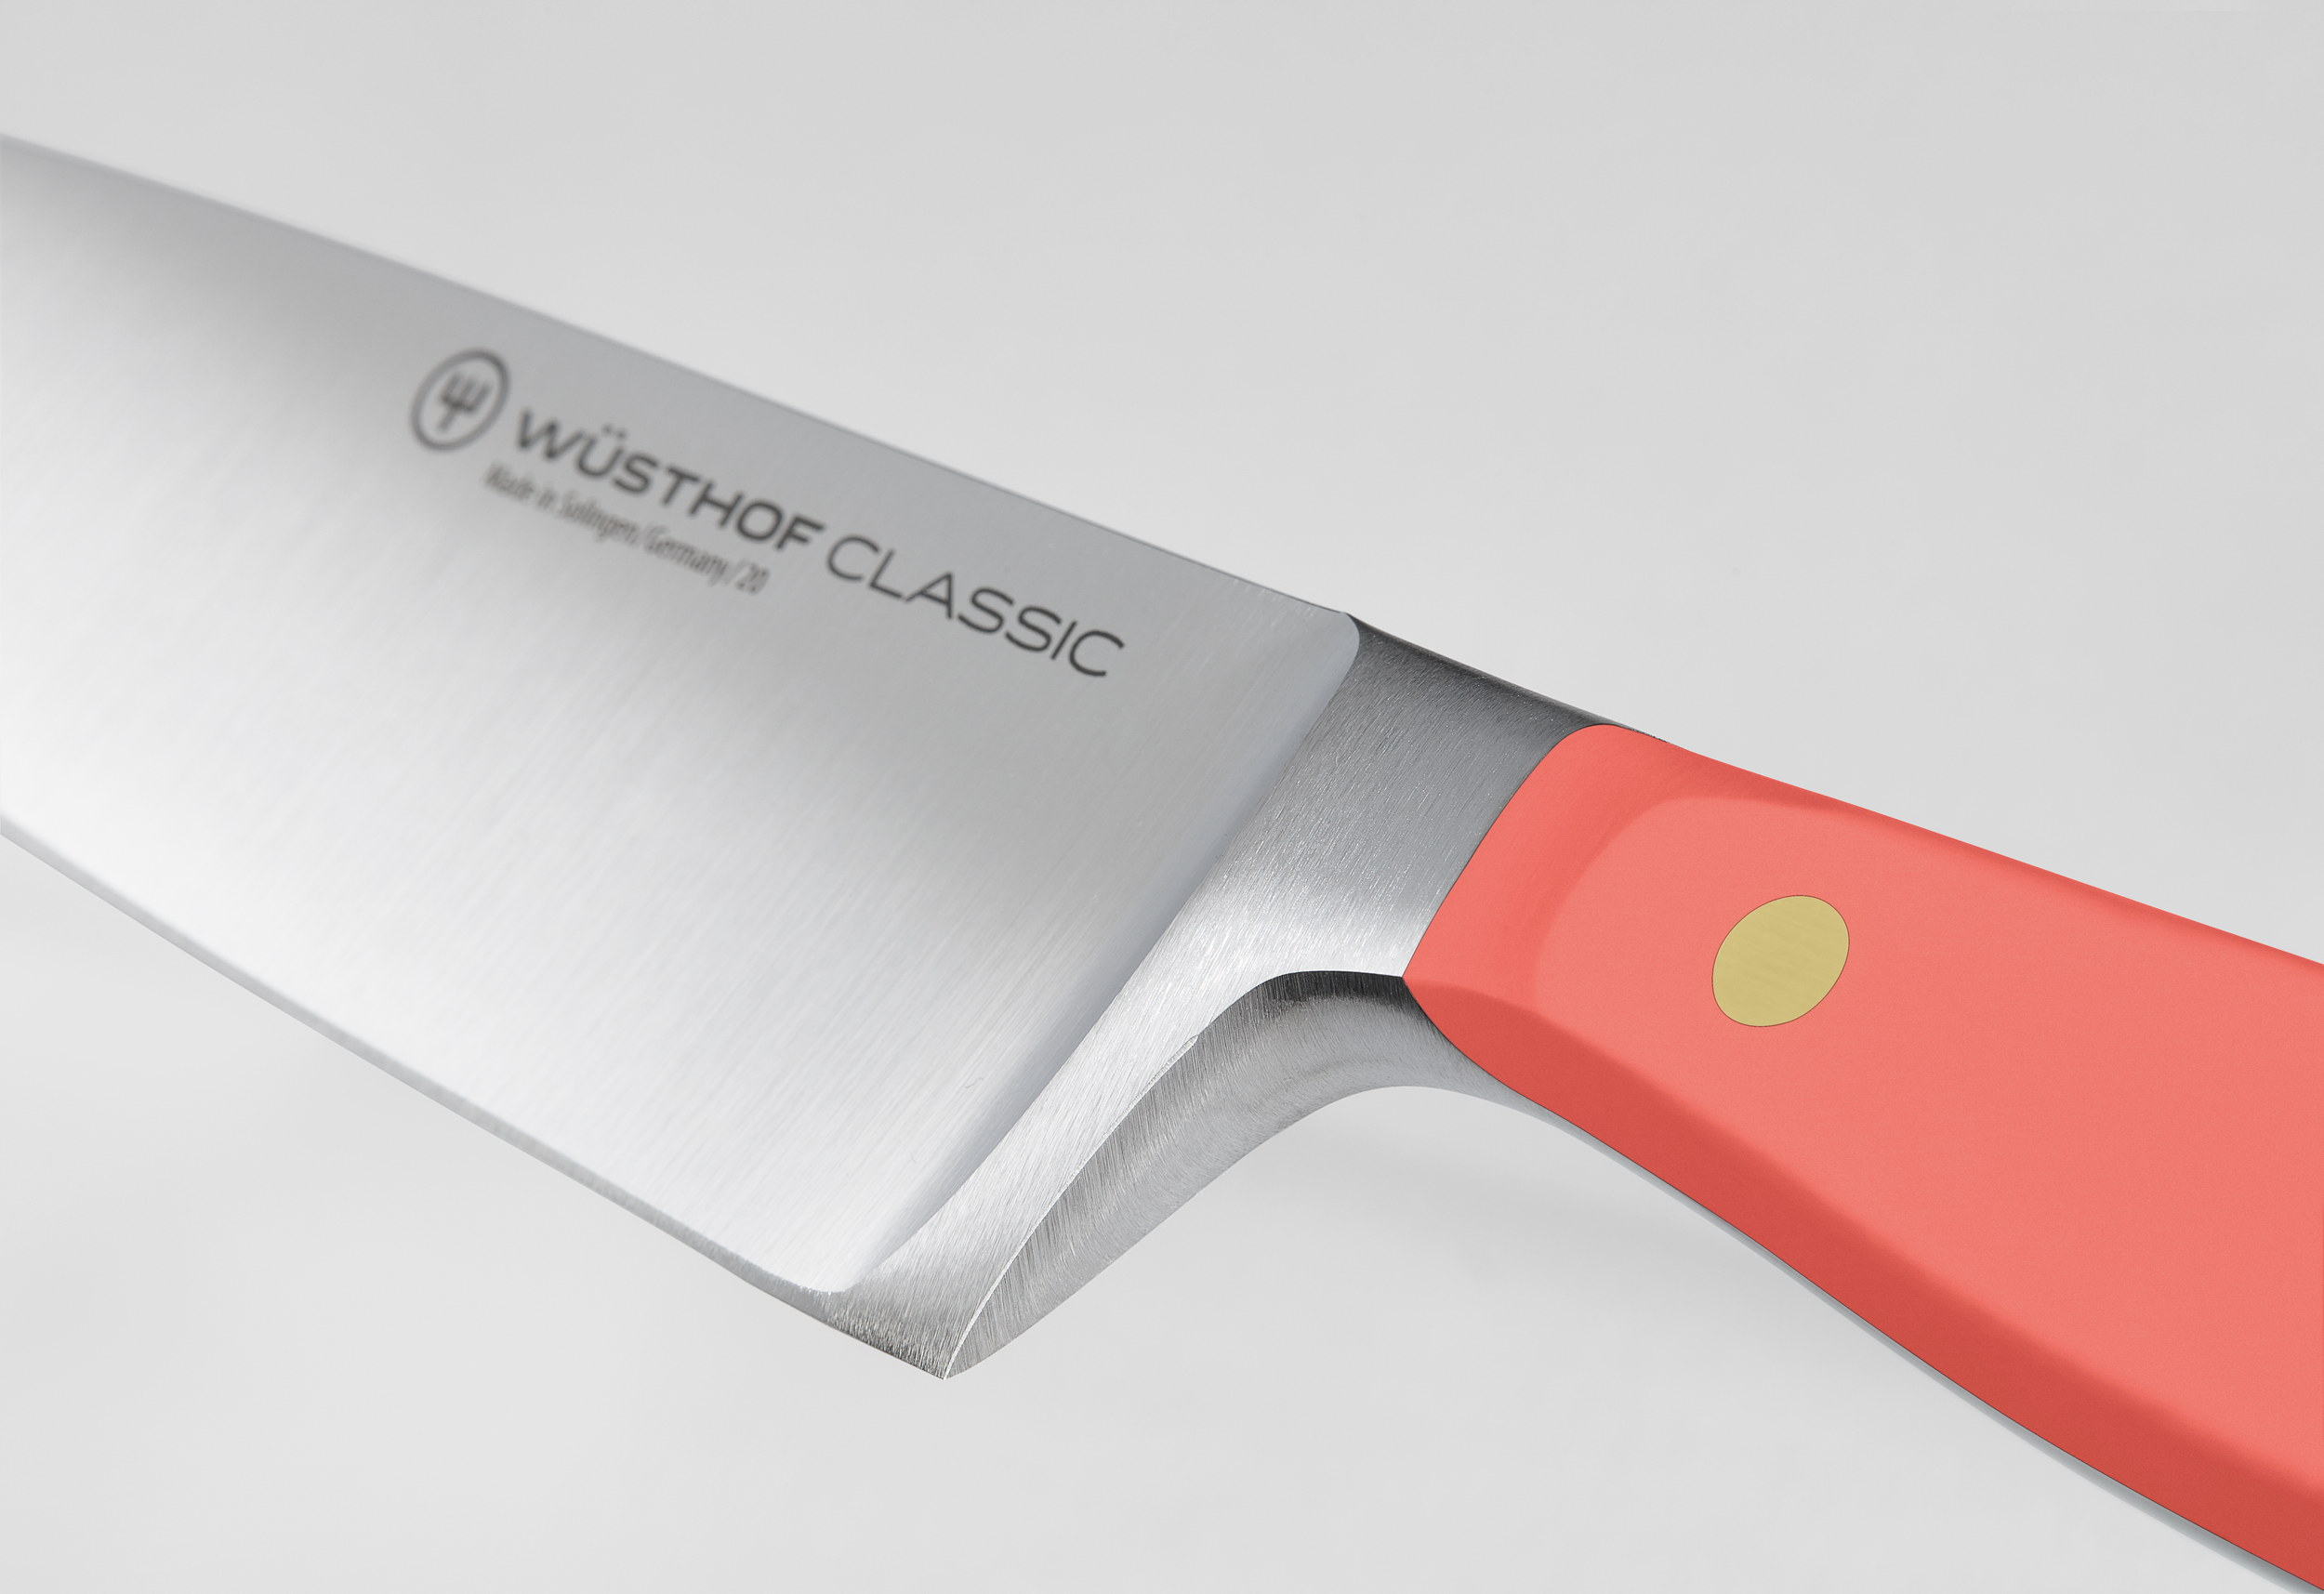 Wusthof Classic 10″ Chef Knife : The Finest Edge